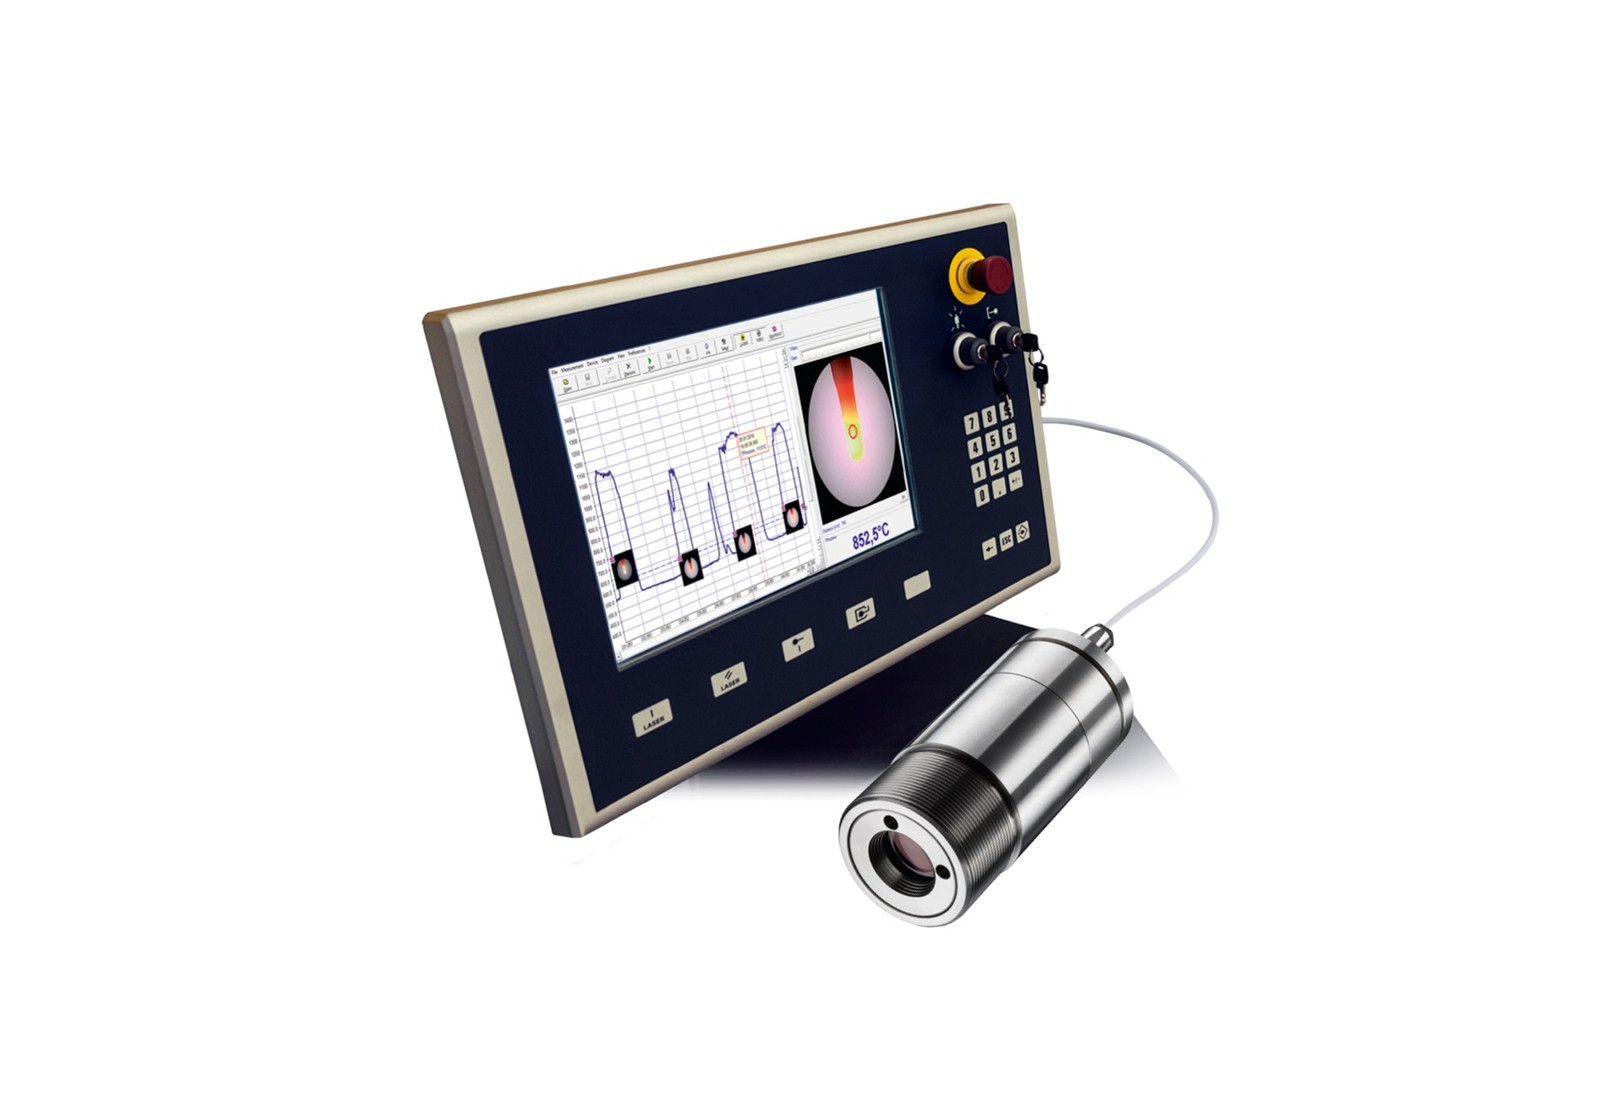 Neu von Optris: Das Video-Pyrometer CS Video 3M zur Temperaturmessung an Metall und Kompositmaterial